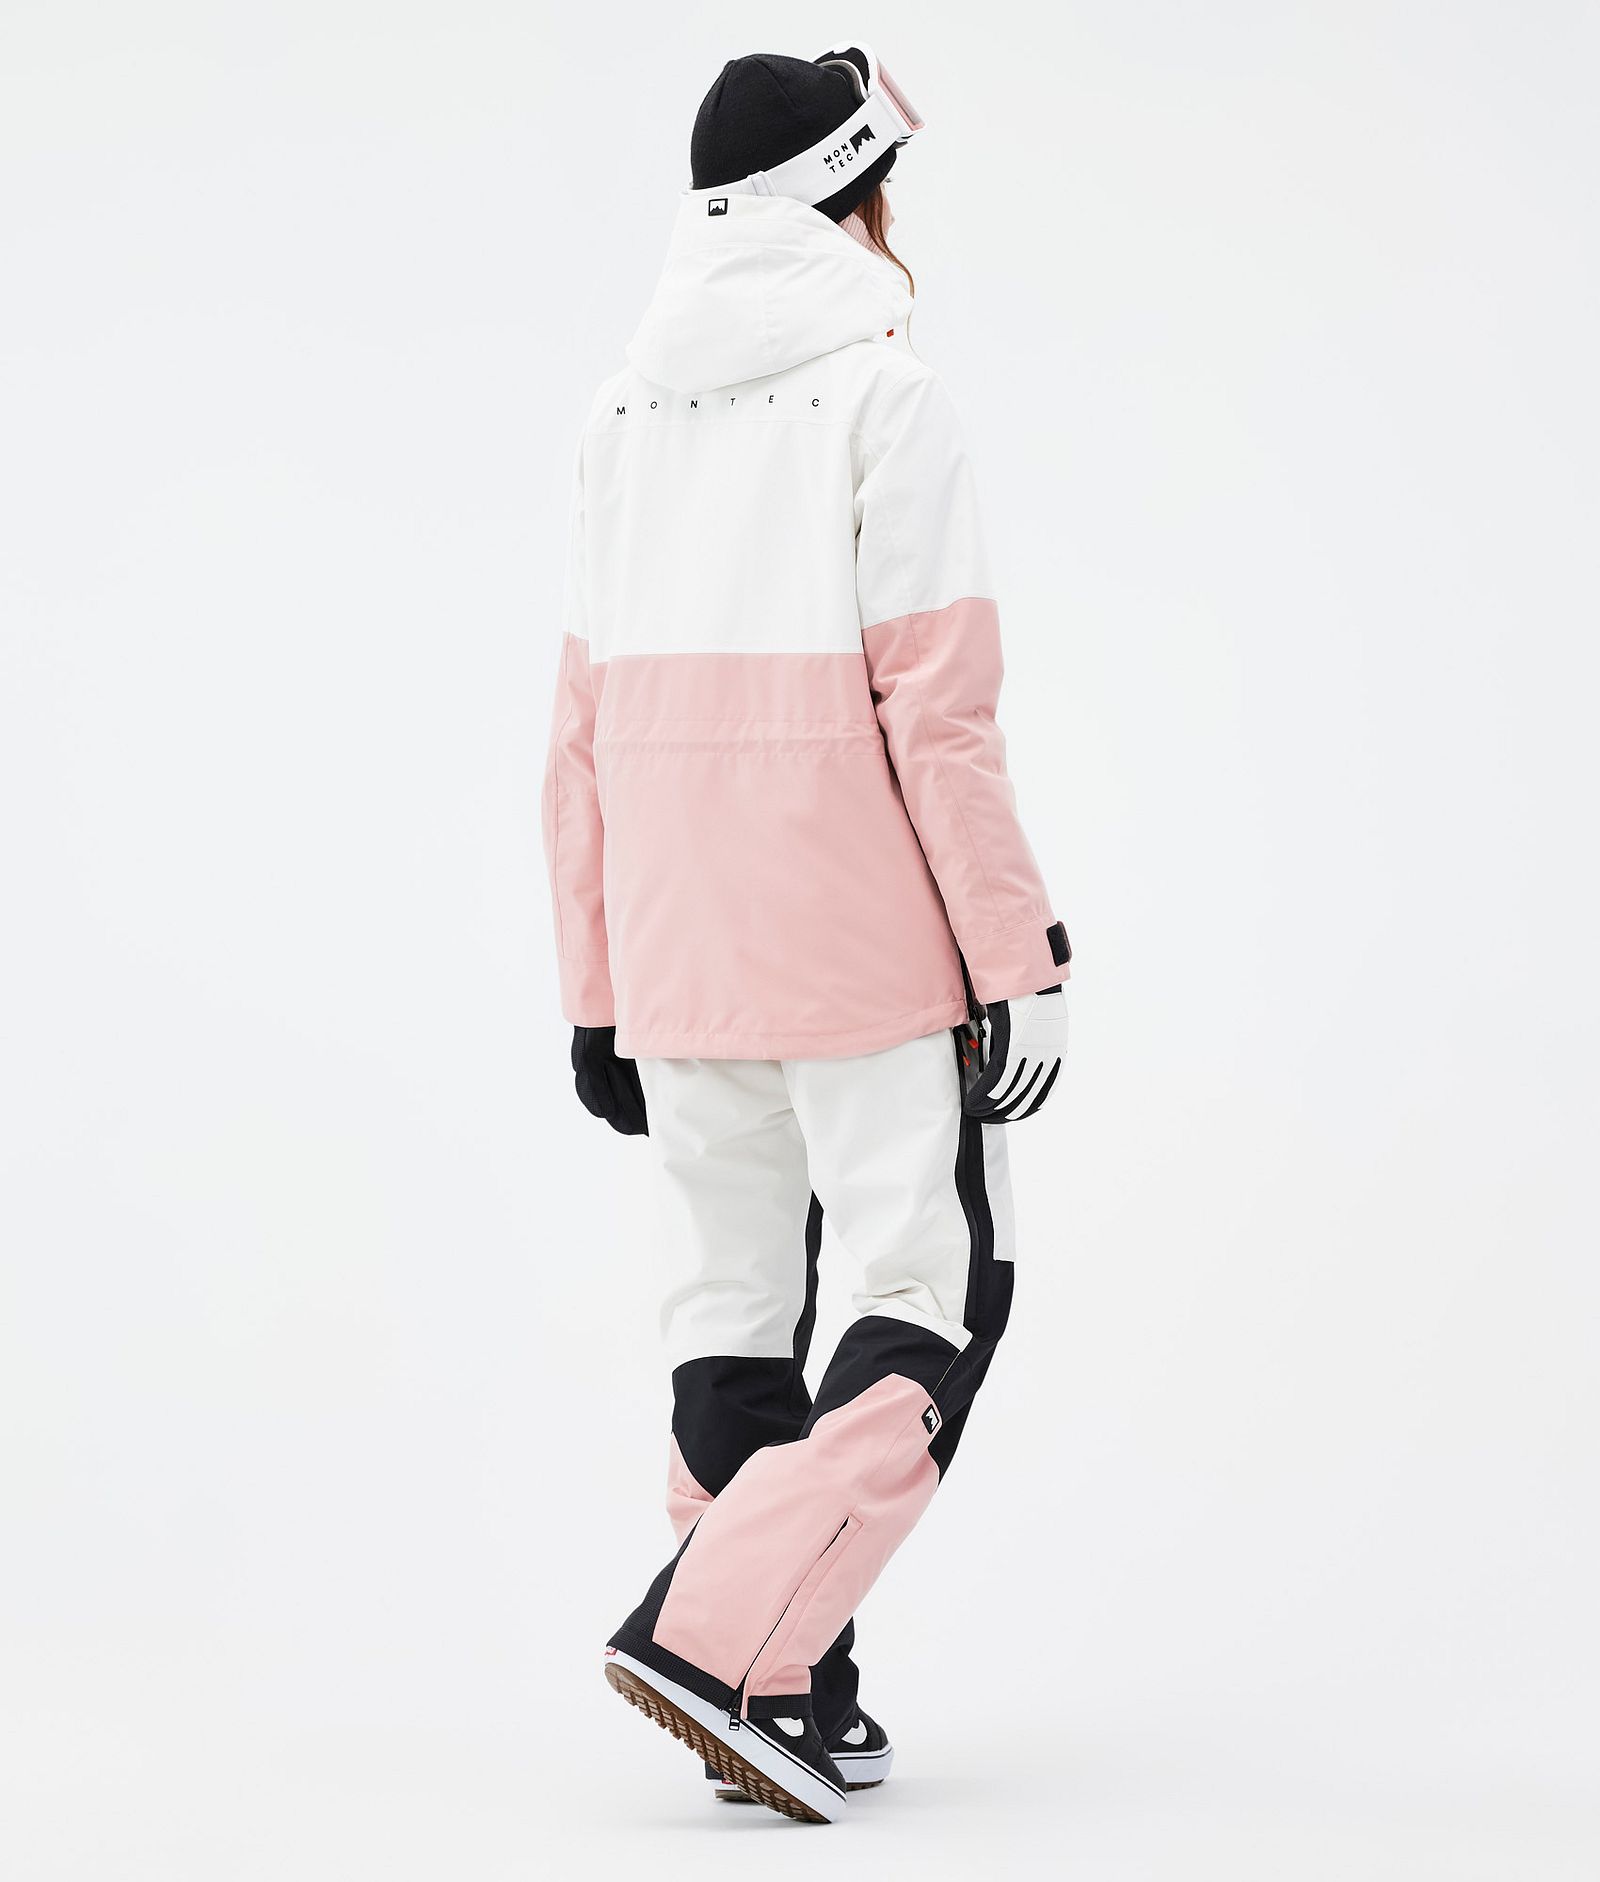 Dune W Snowboard Jacket Women Old White/Black/Soft Pink, Image 5 of 9